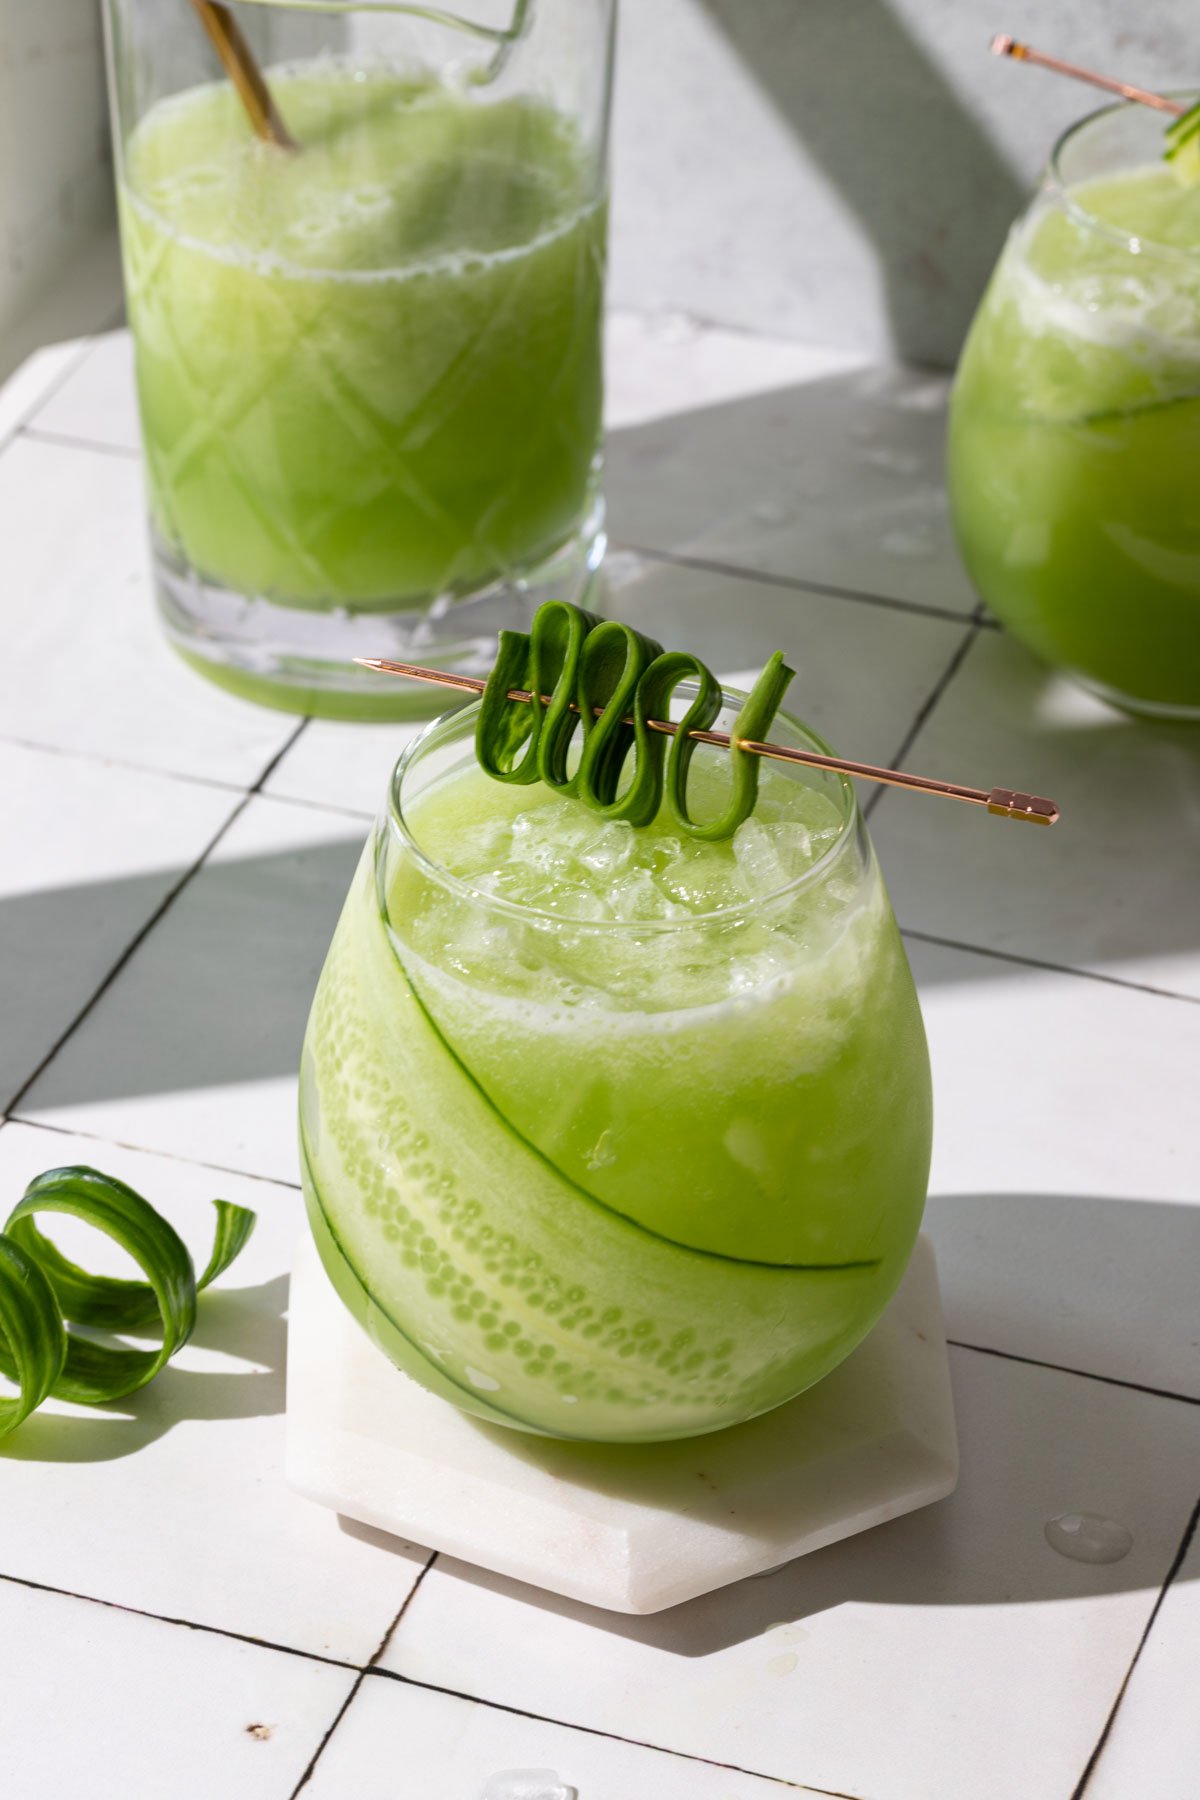 Cucumber drink with a cucumber garnish in a glass